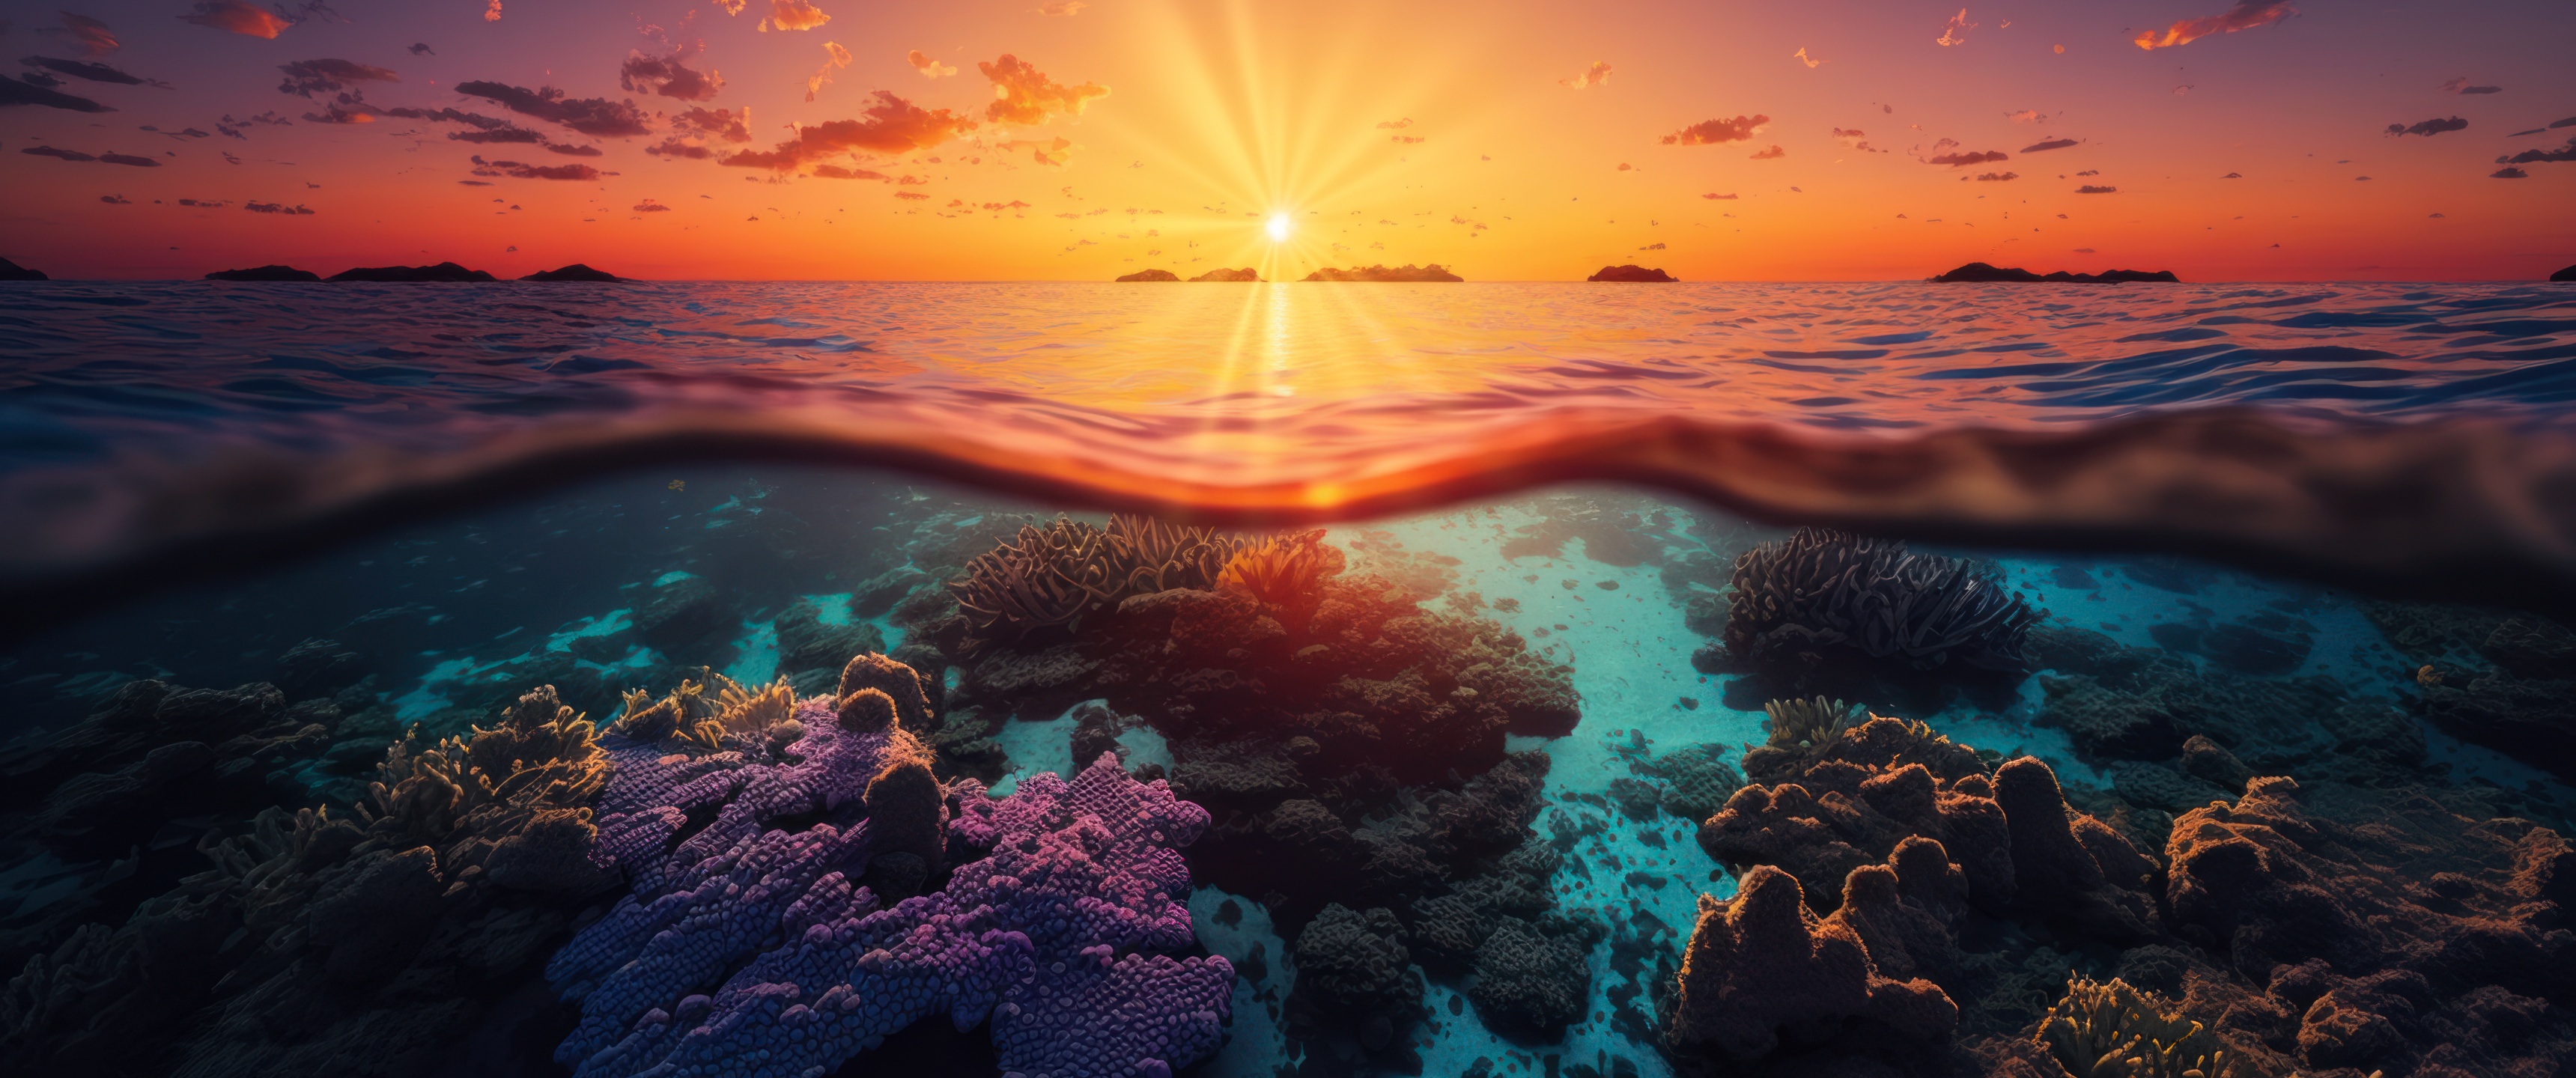 Sunset Wallpaper 4K, Underwater, Coral reef, Seascape